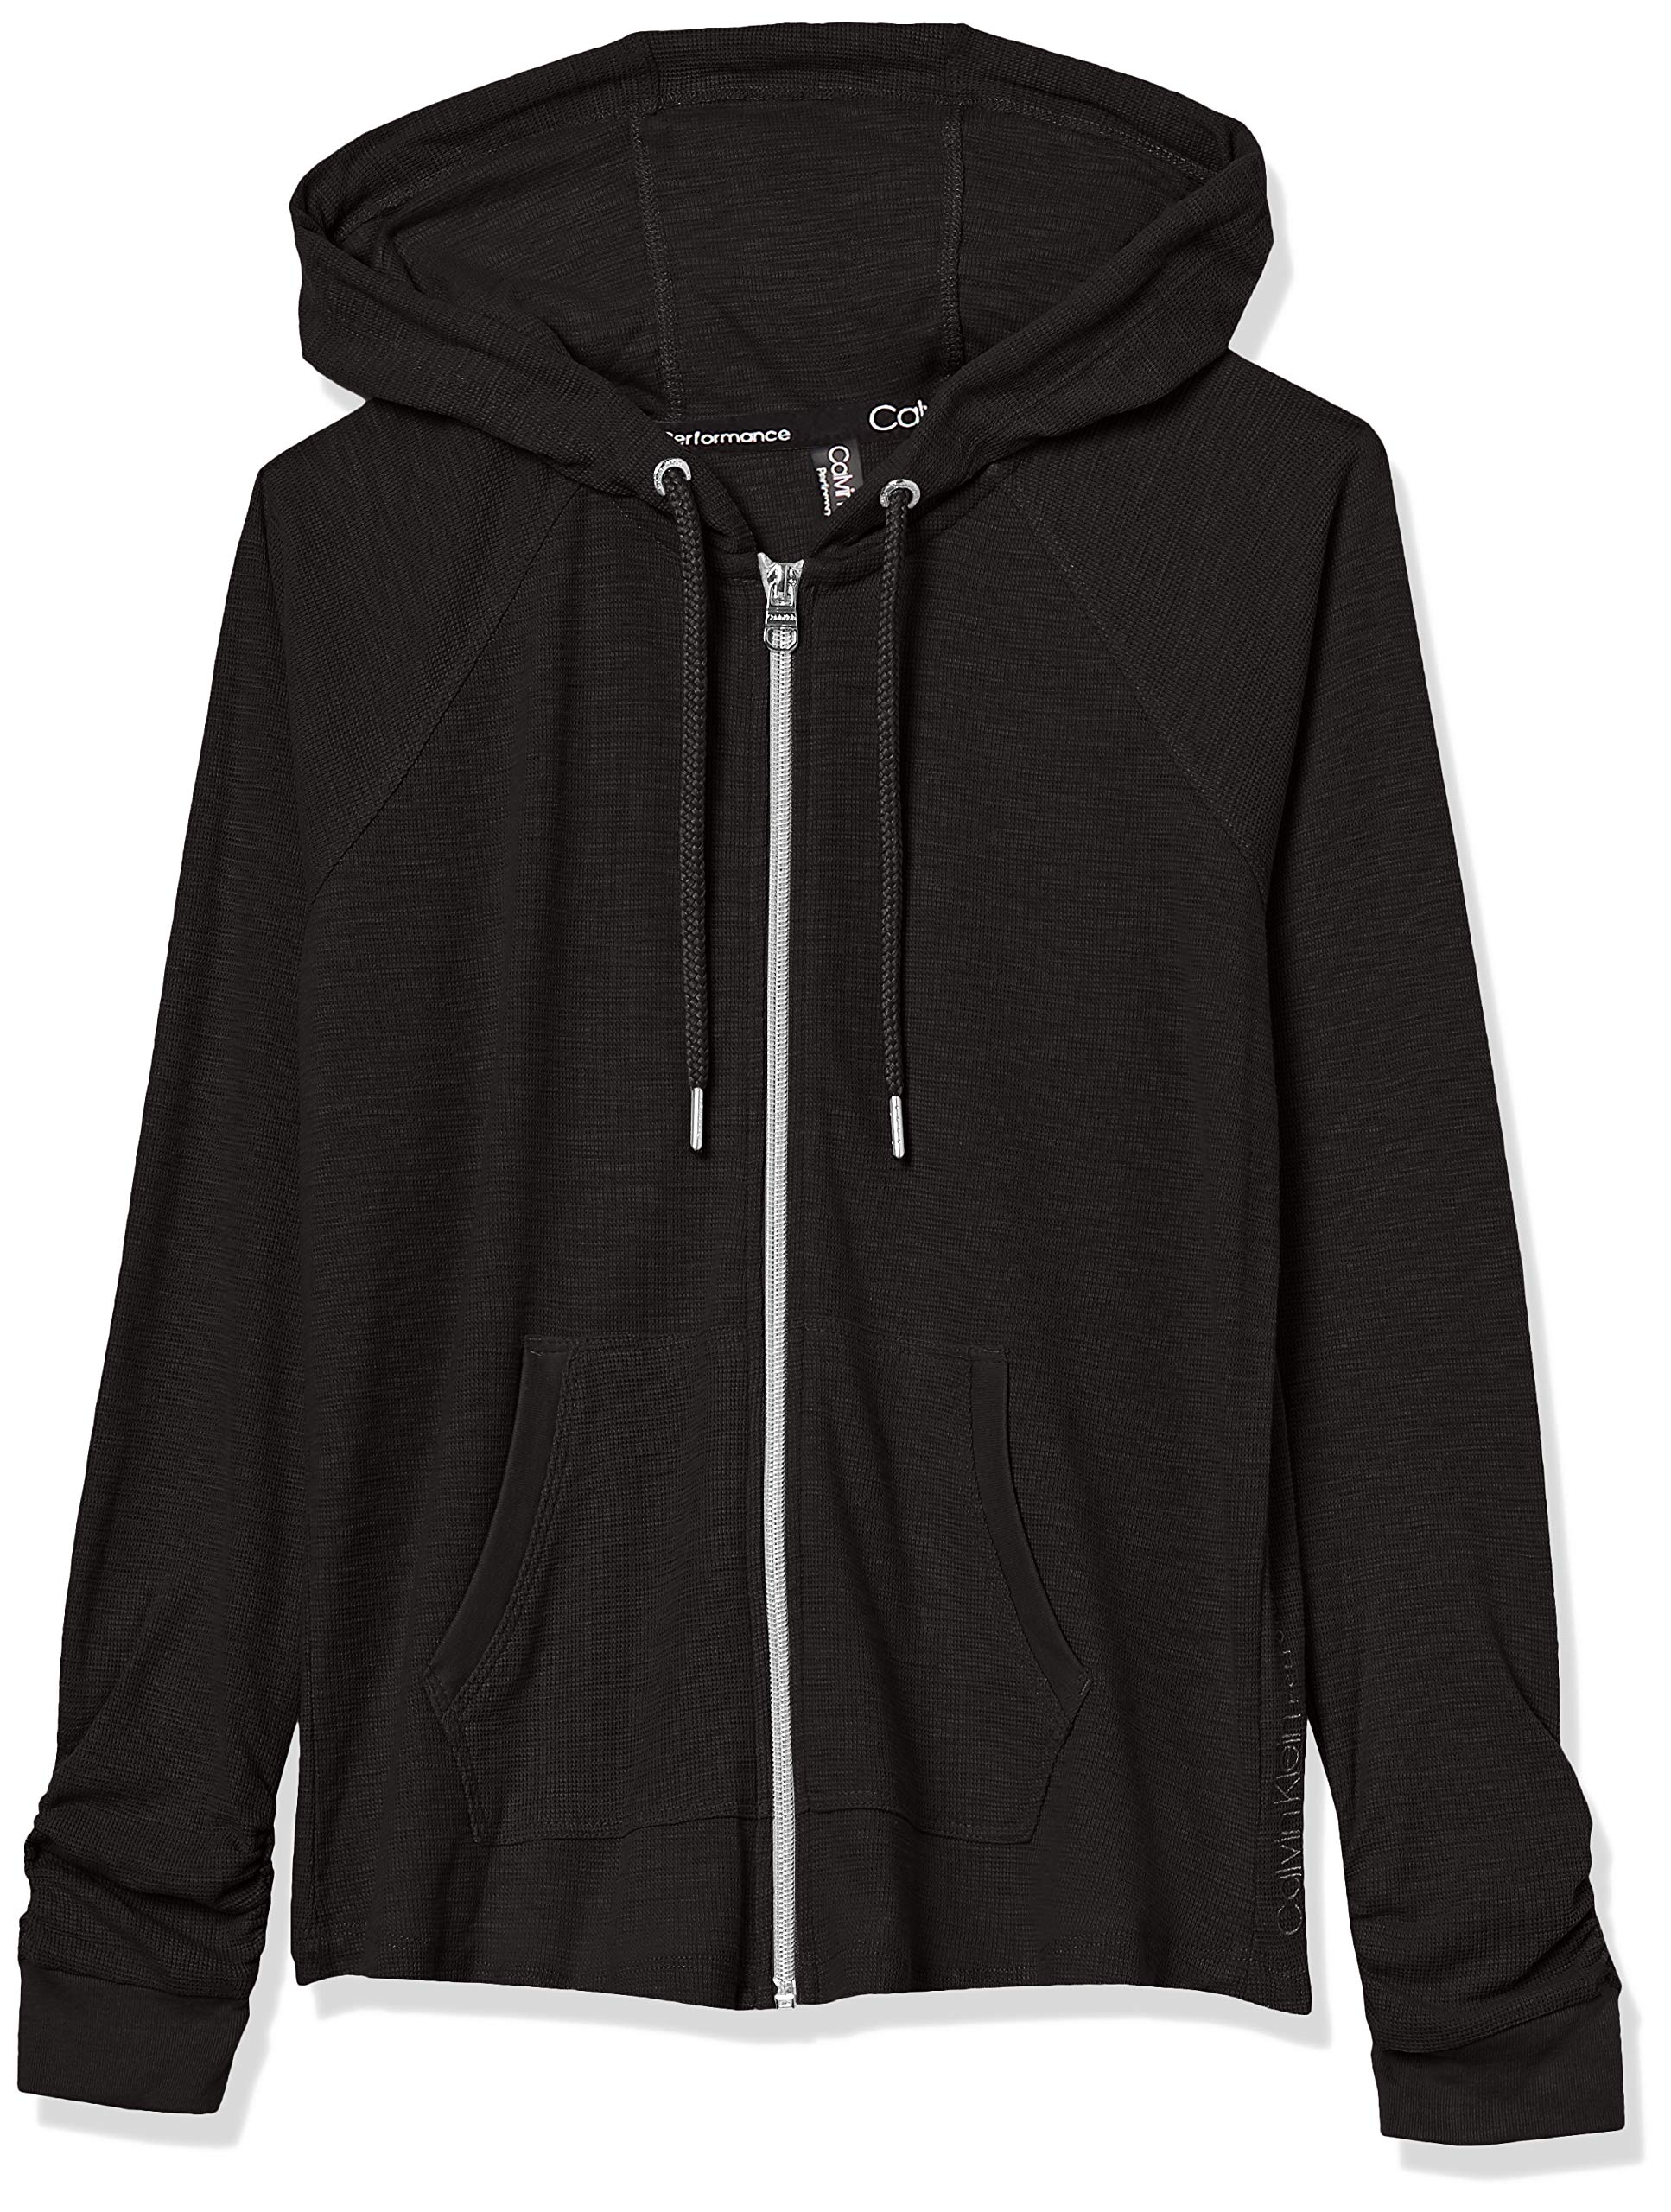 Calvin Klein Women's Premium Performance Ruched Long Sleeve Zip Up Hoodie (Standard and Plus)